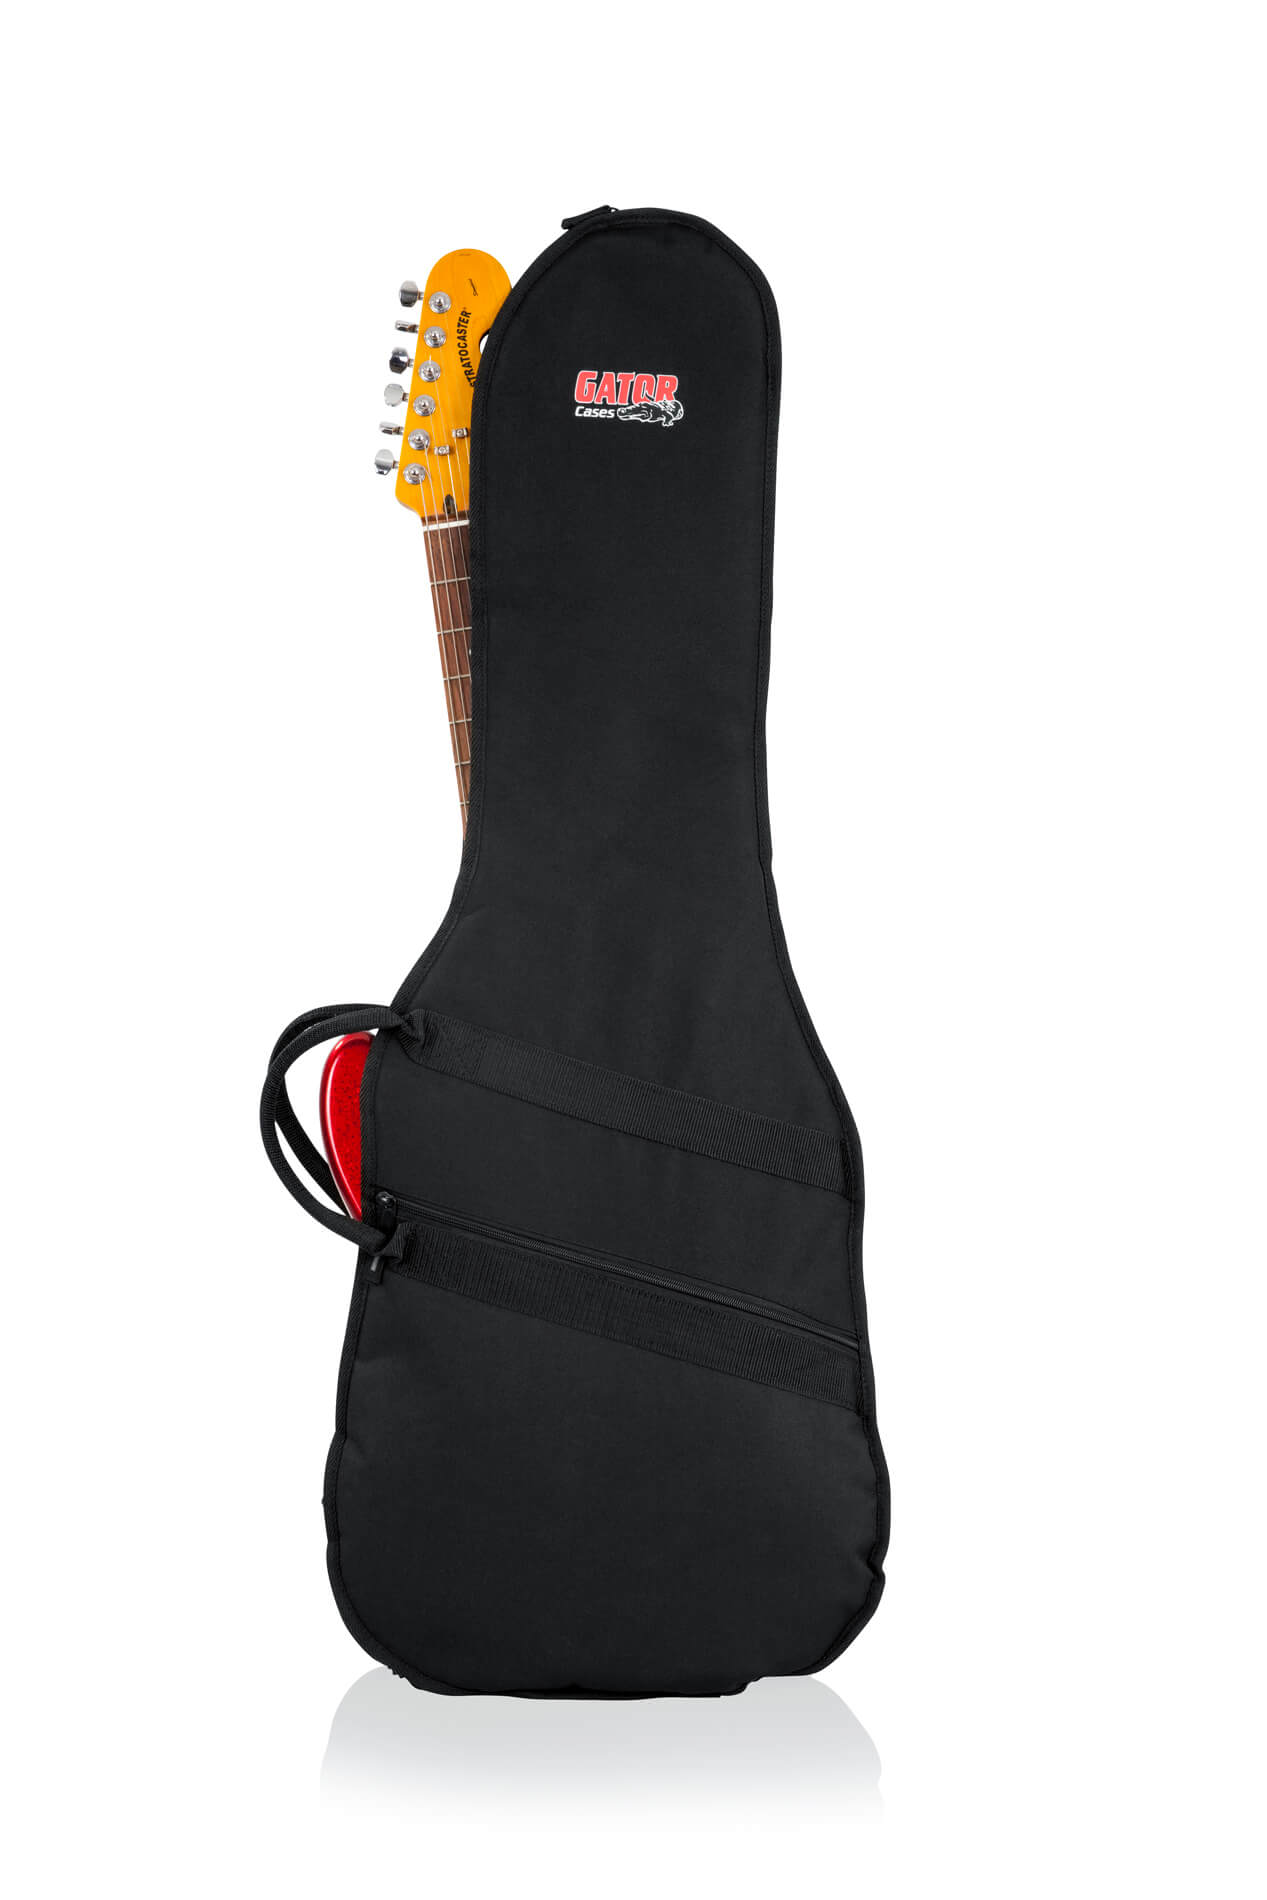 Gator Electric Guitar Gig Bag - GBE Series